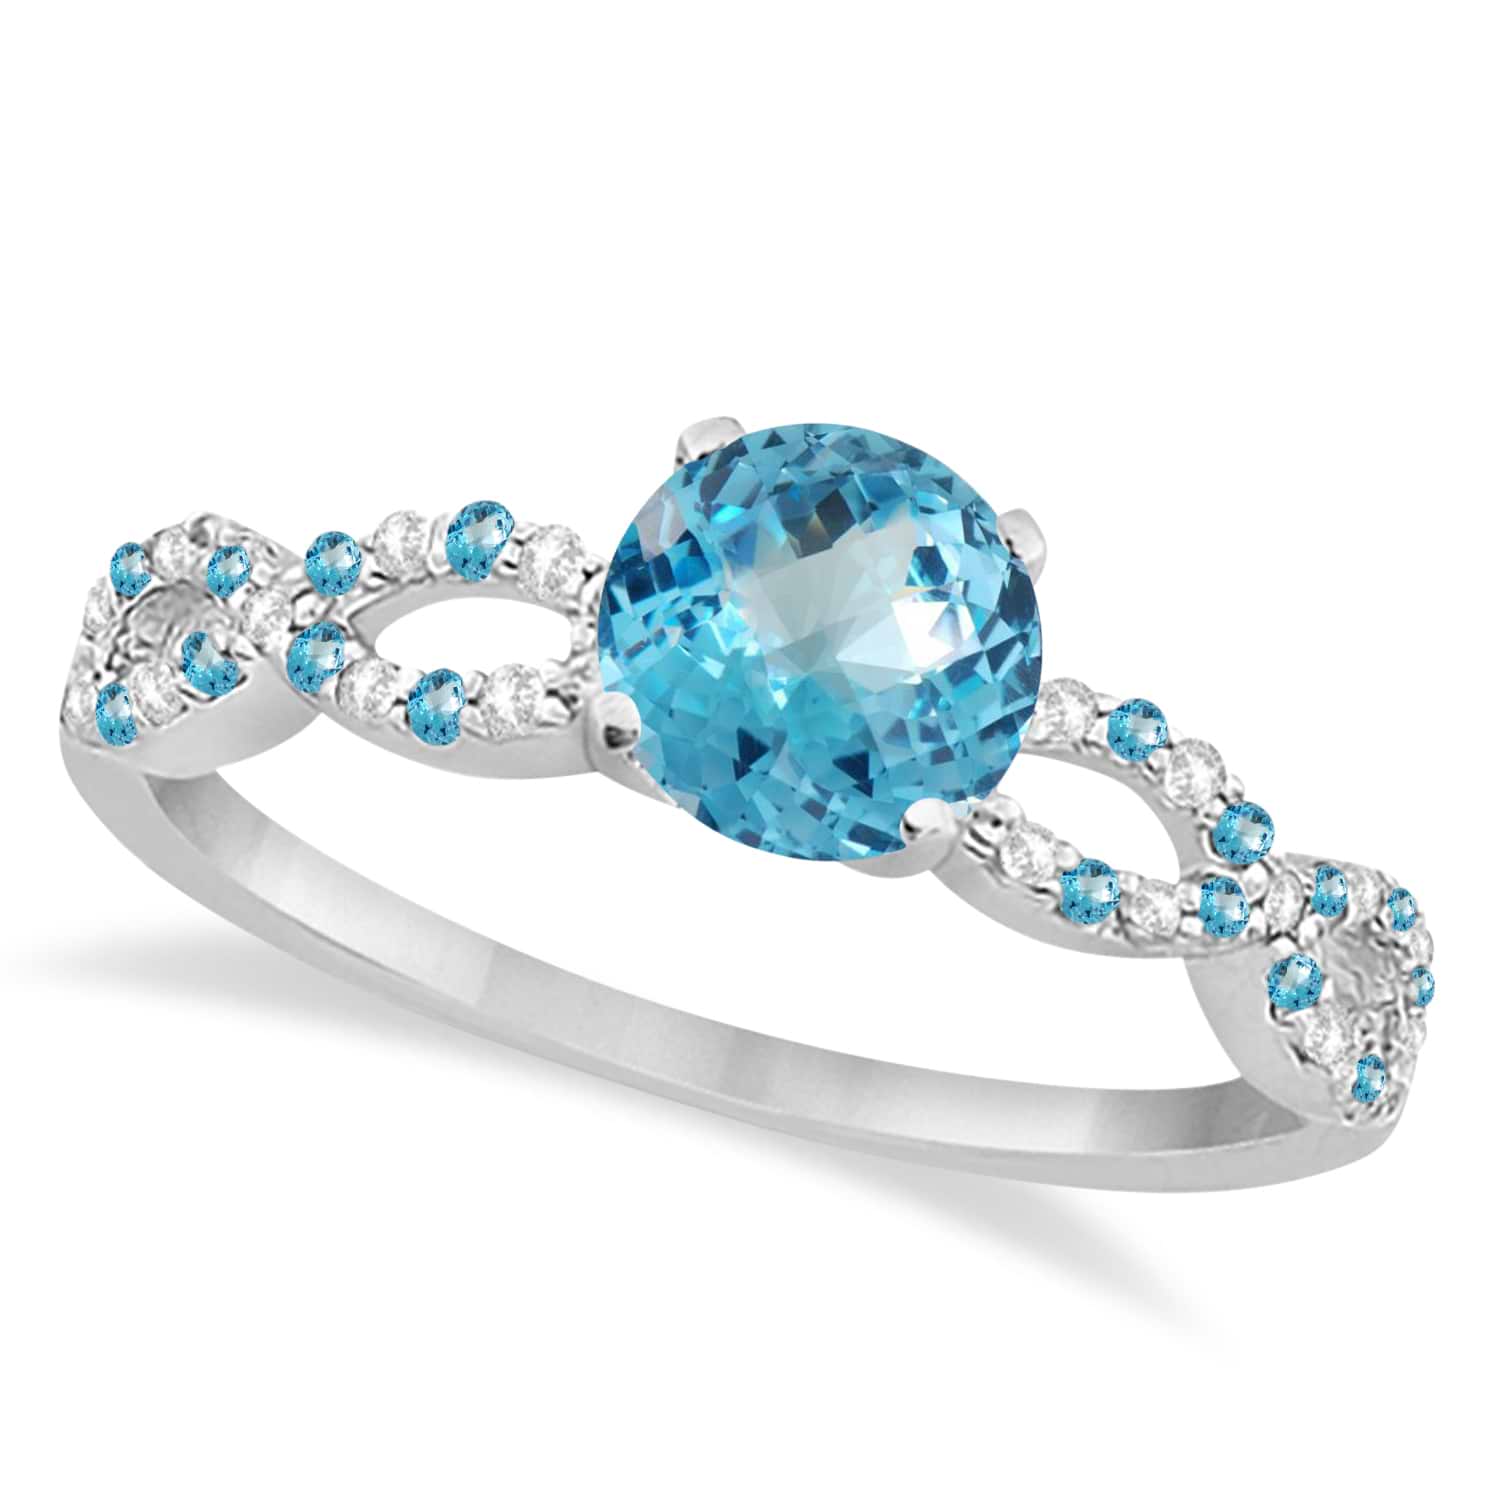 Infinity Diamond & Blue Topaz Engagement Ring 14K White Gold 1.05ct